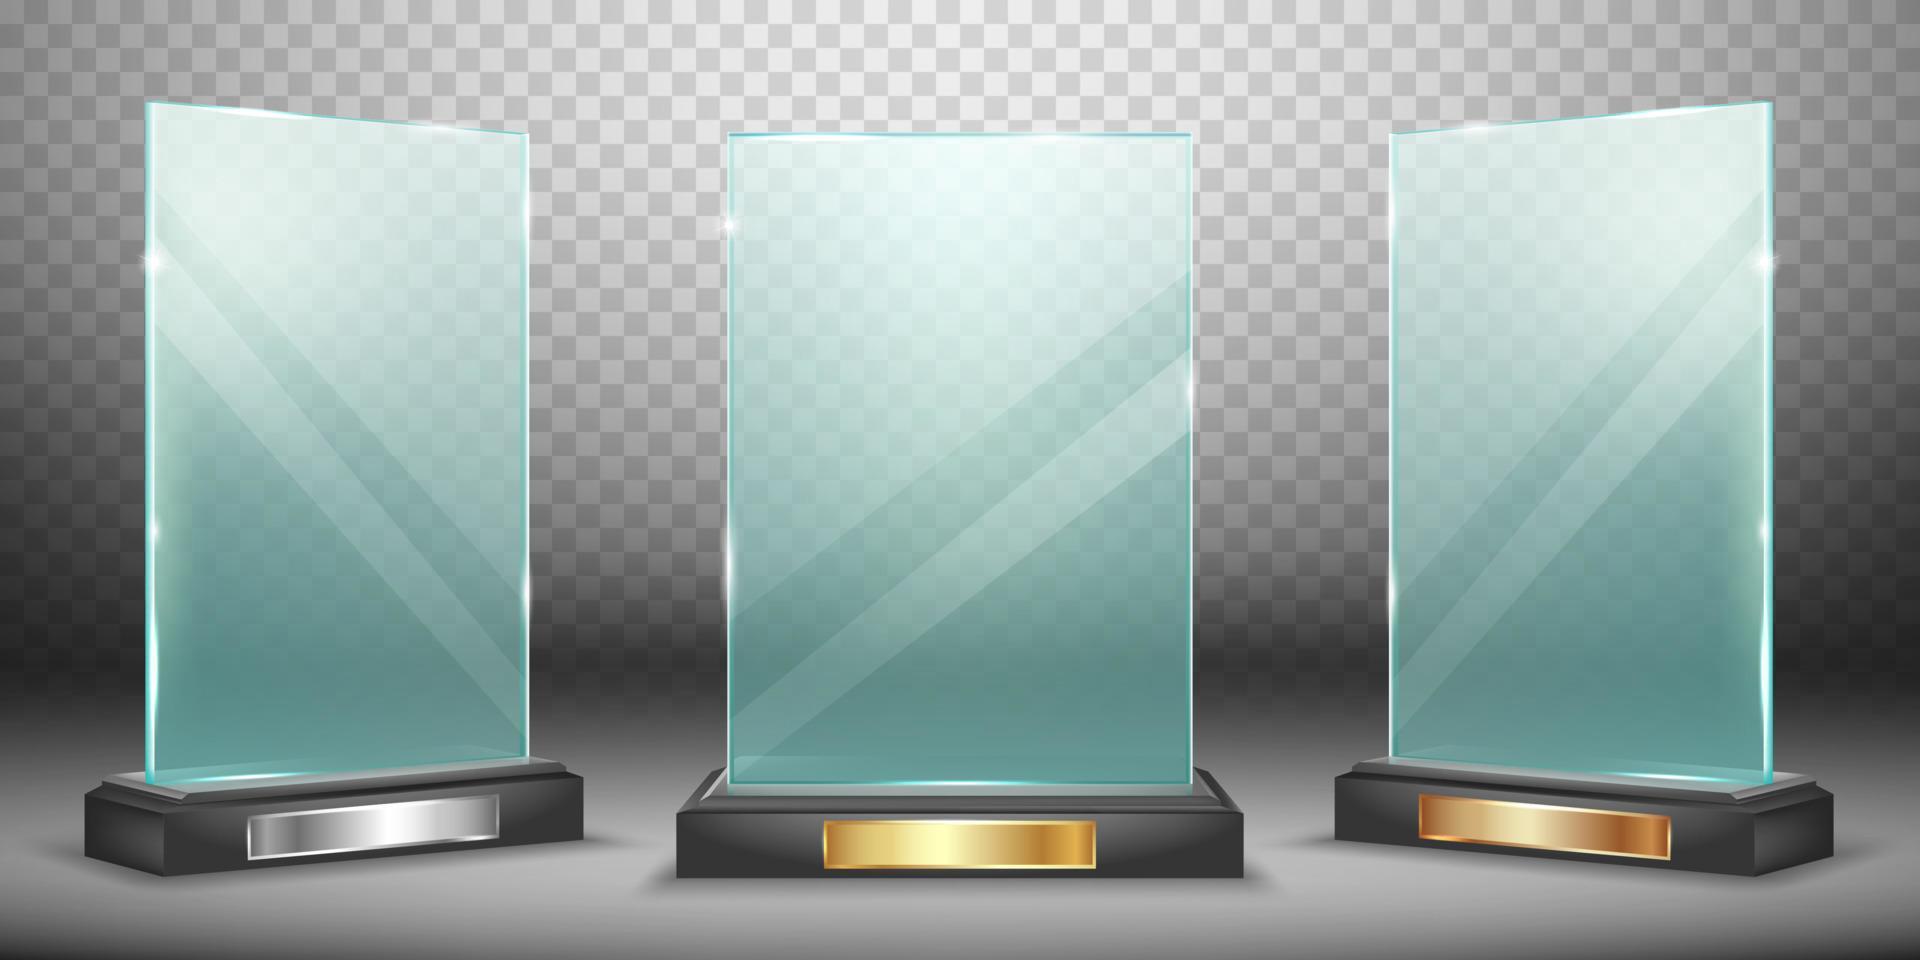 Glass trophy or acrylic winner award realistic vector